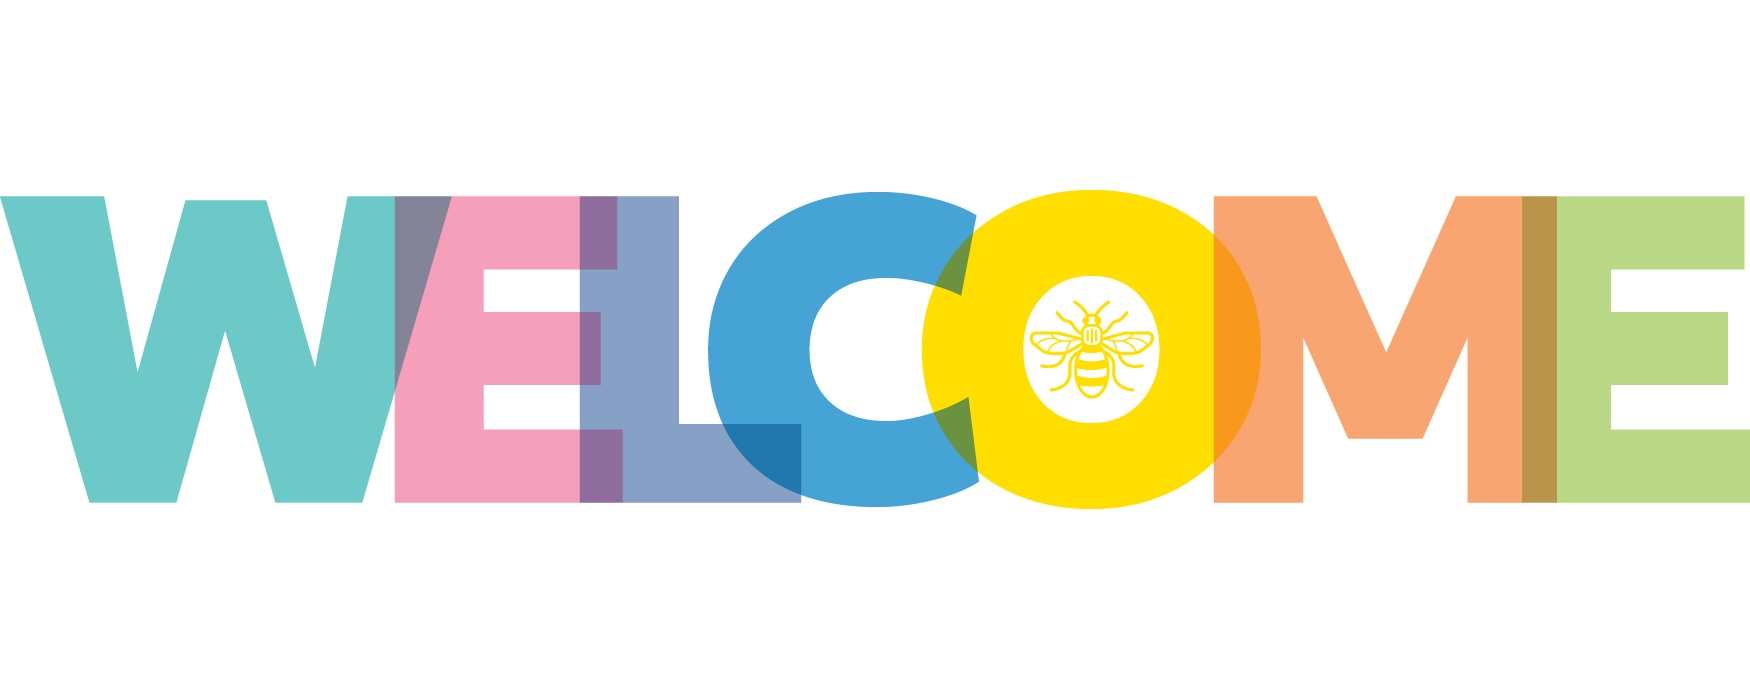 Delegate welcome logo